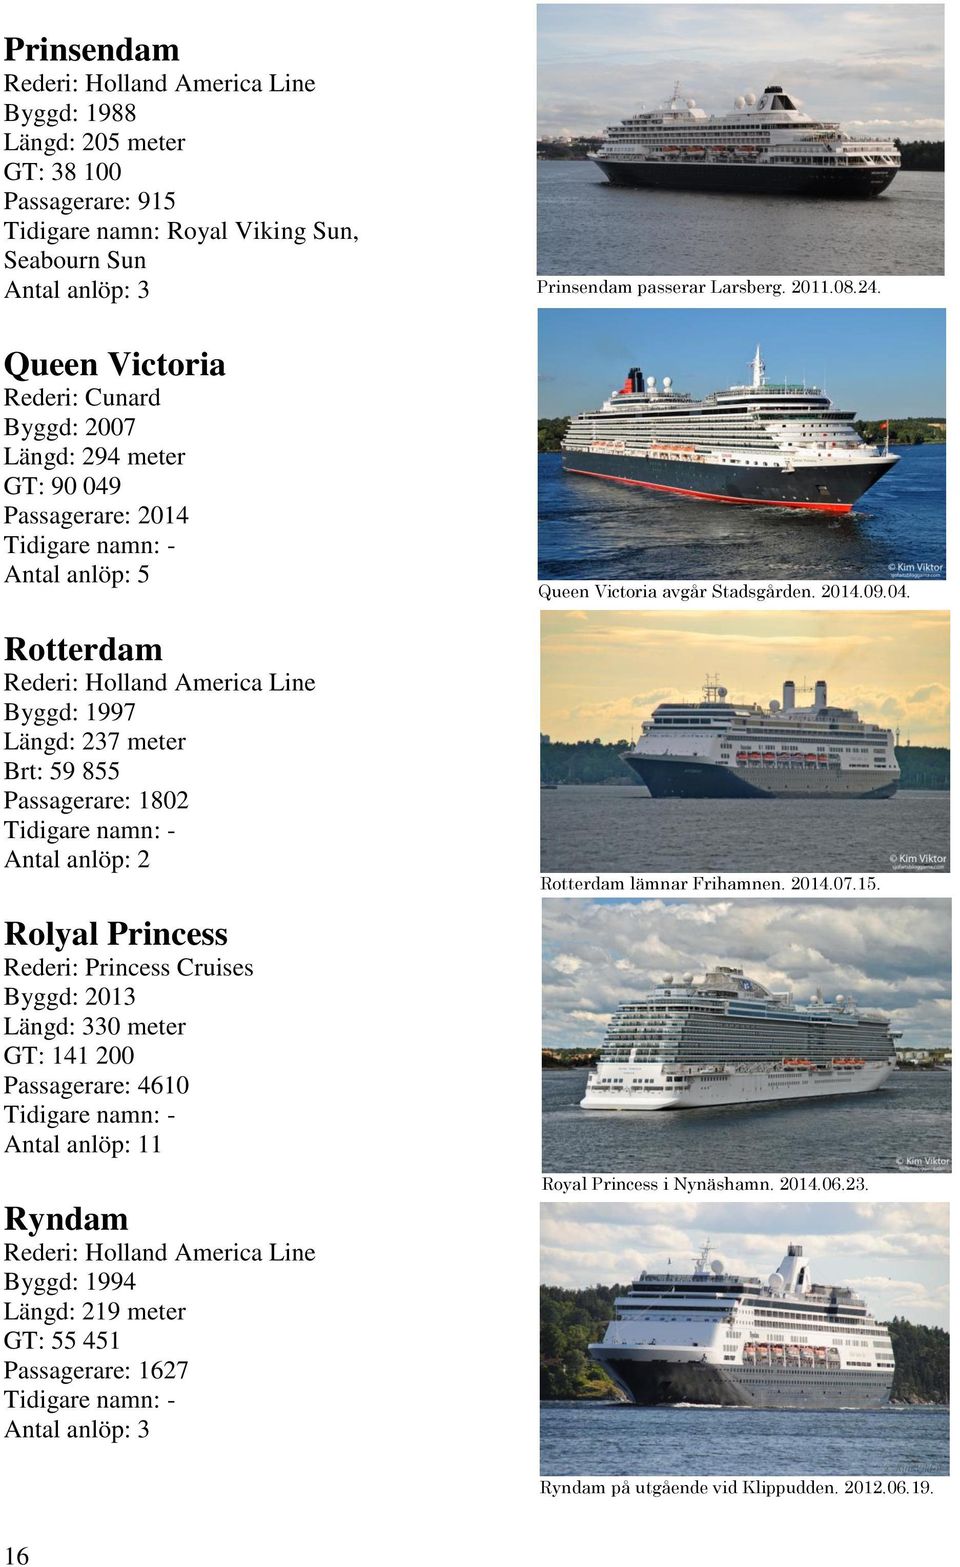 Princess Cruises Byggd: 2013 Längd: 330 meter GT: 141 200 Passagerare: 4610 1 Ryndam Rederi: Holland America Line Byggd: 1994 Längd: 219 meter GT: 55 451 Passagerare: 1627 Prinsendam